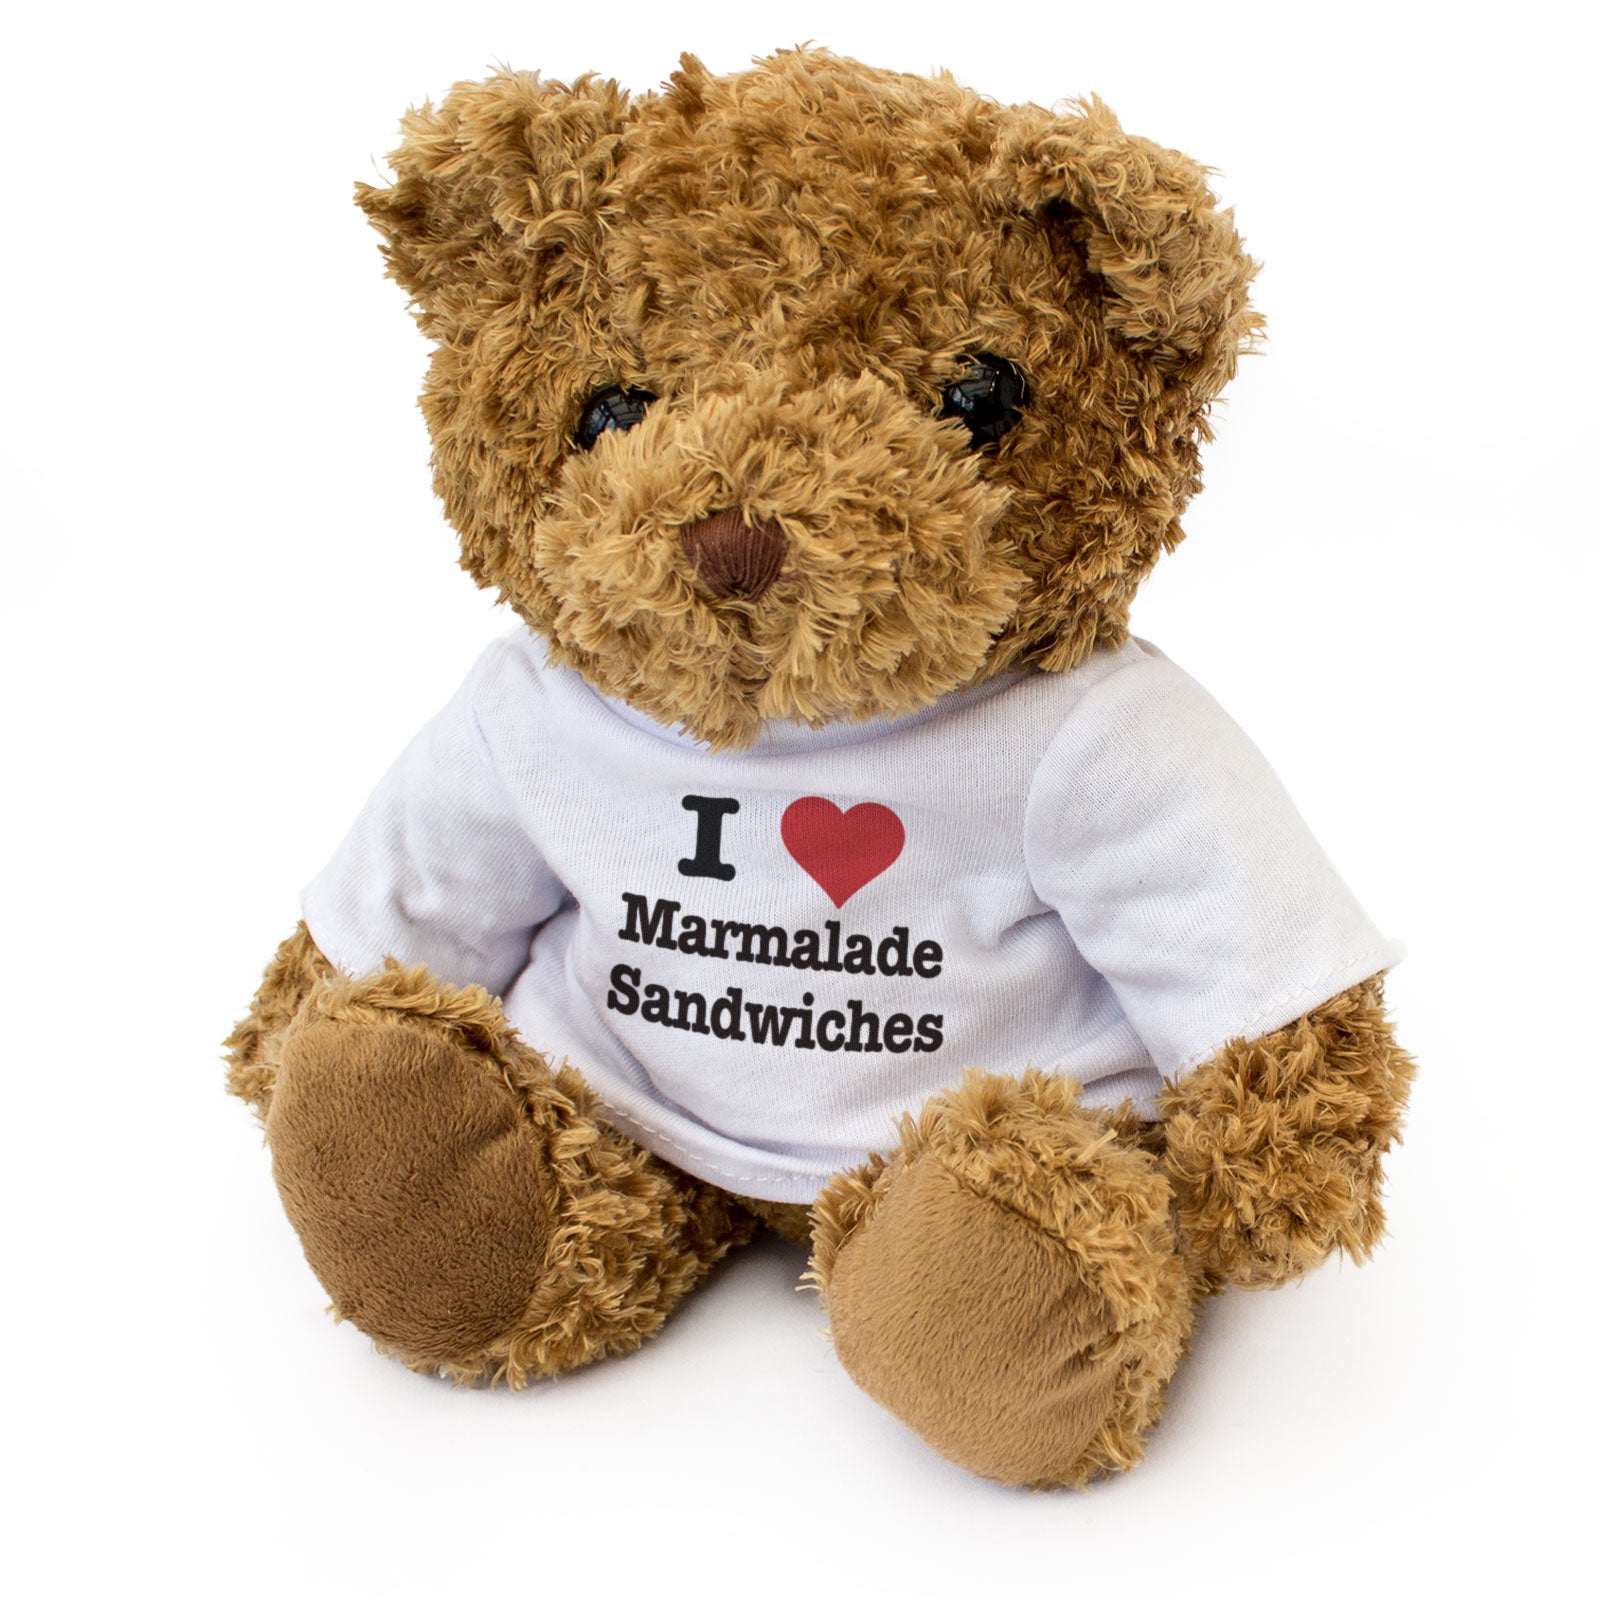 I Love Marmalade Sandwiches - Teddy Bear